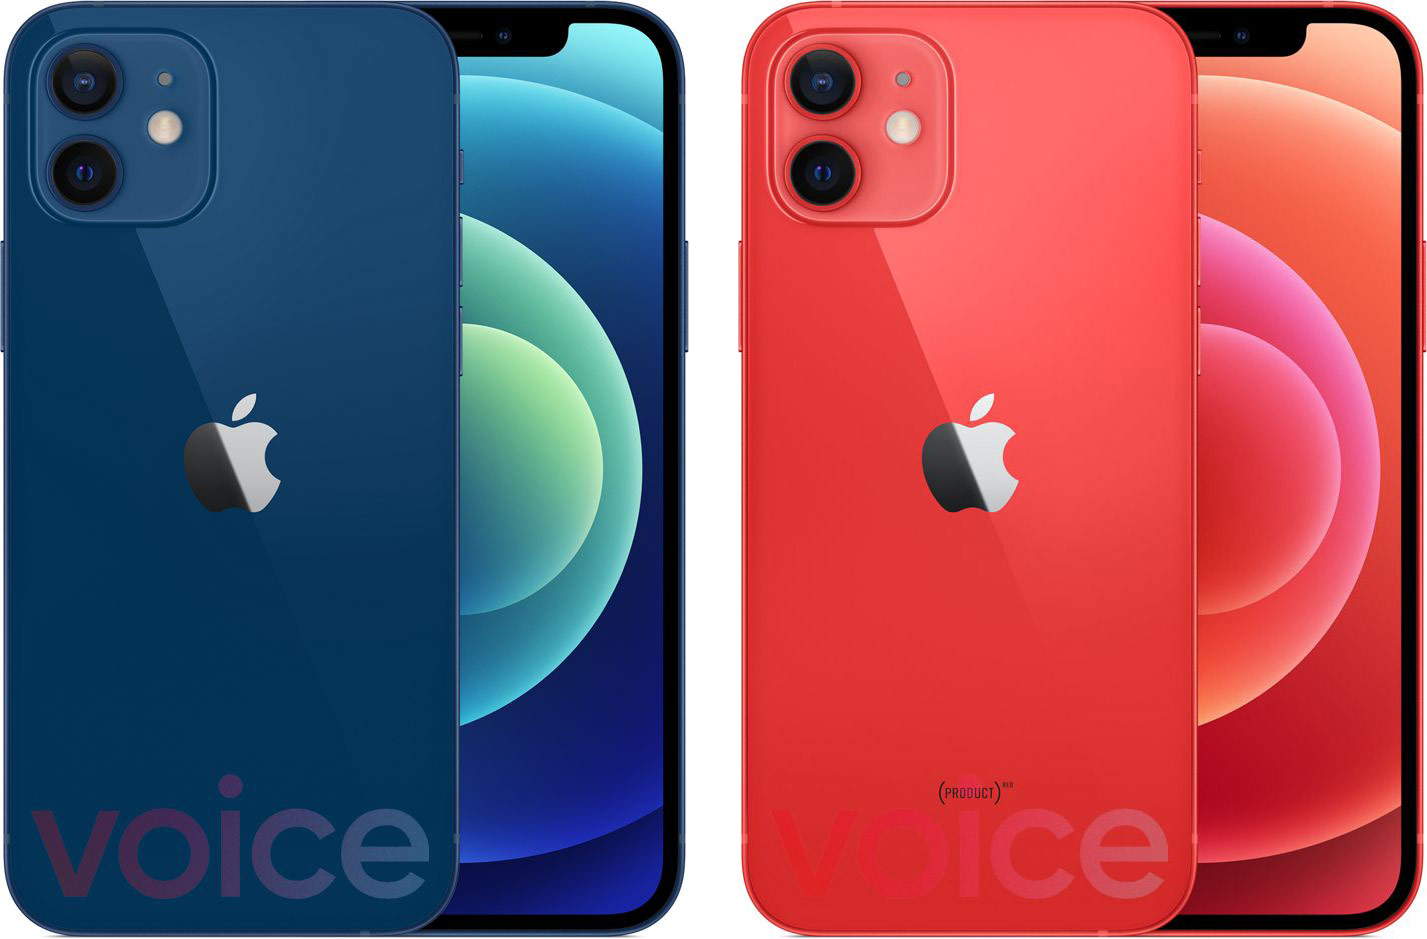 iphone 12 and homepod mini apple leaked 3